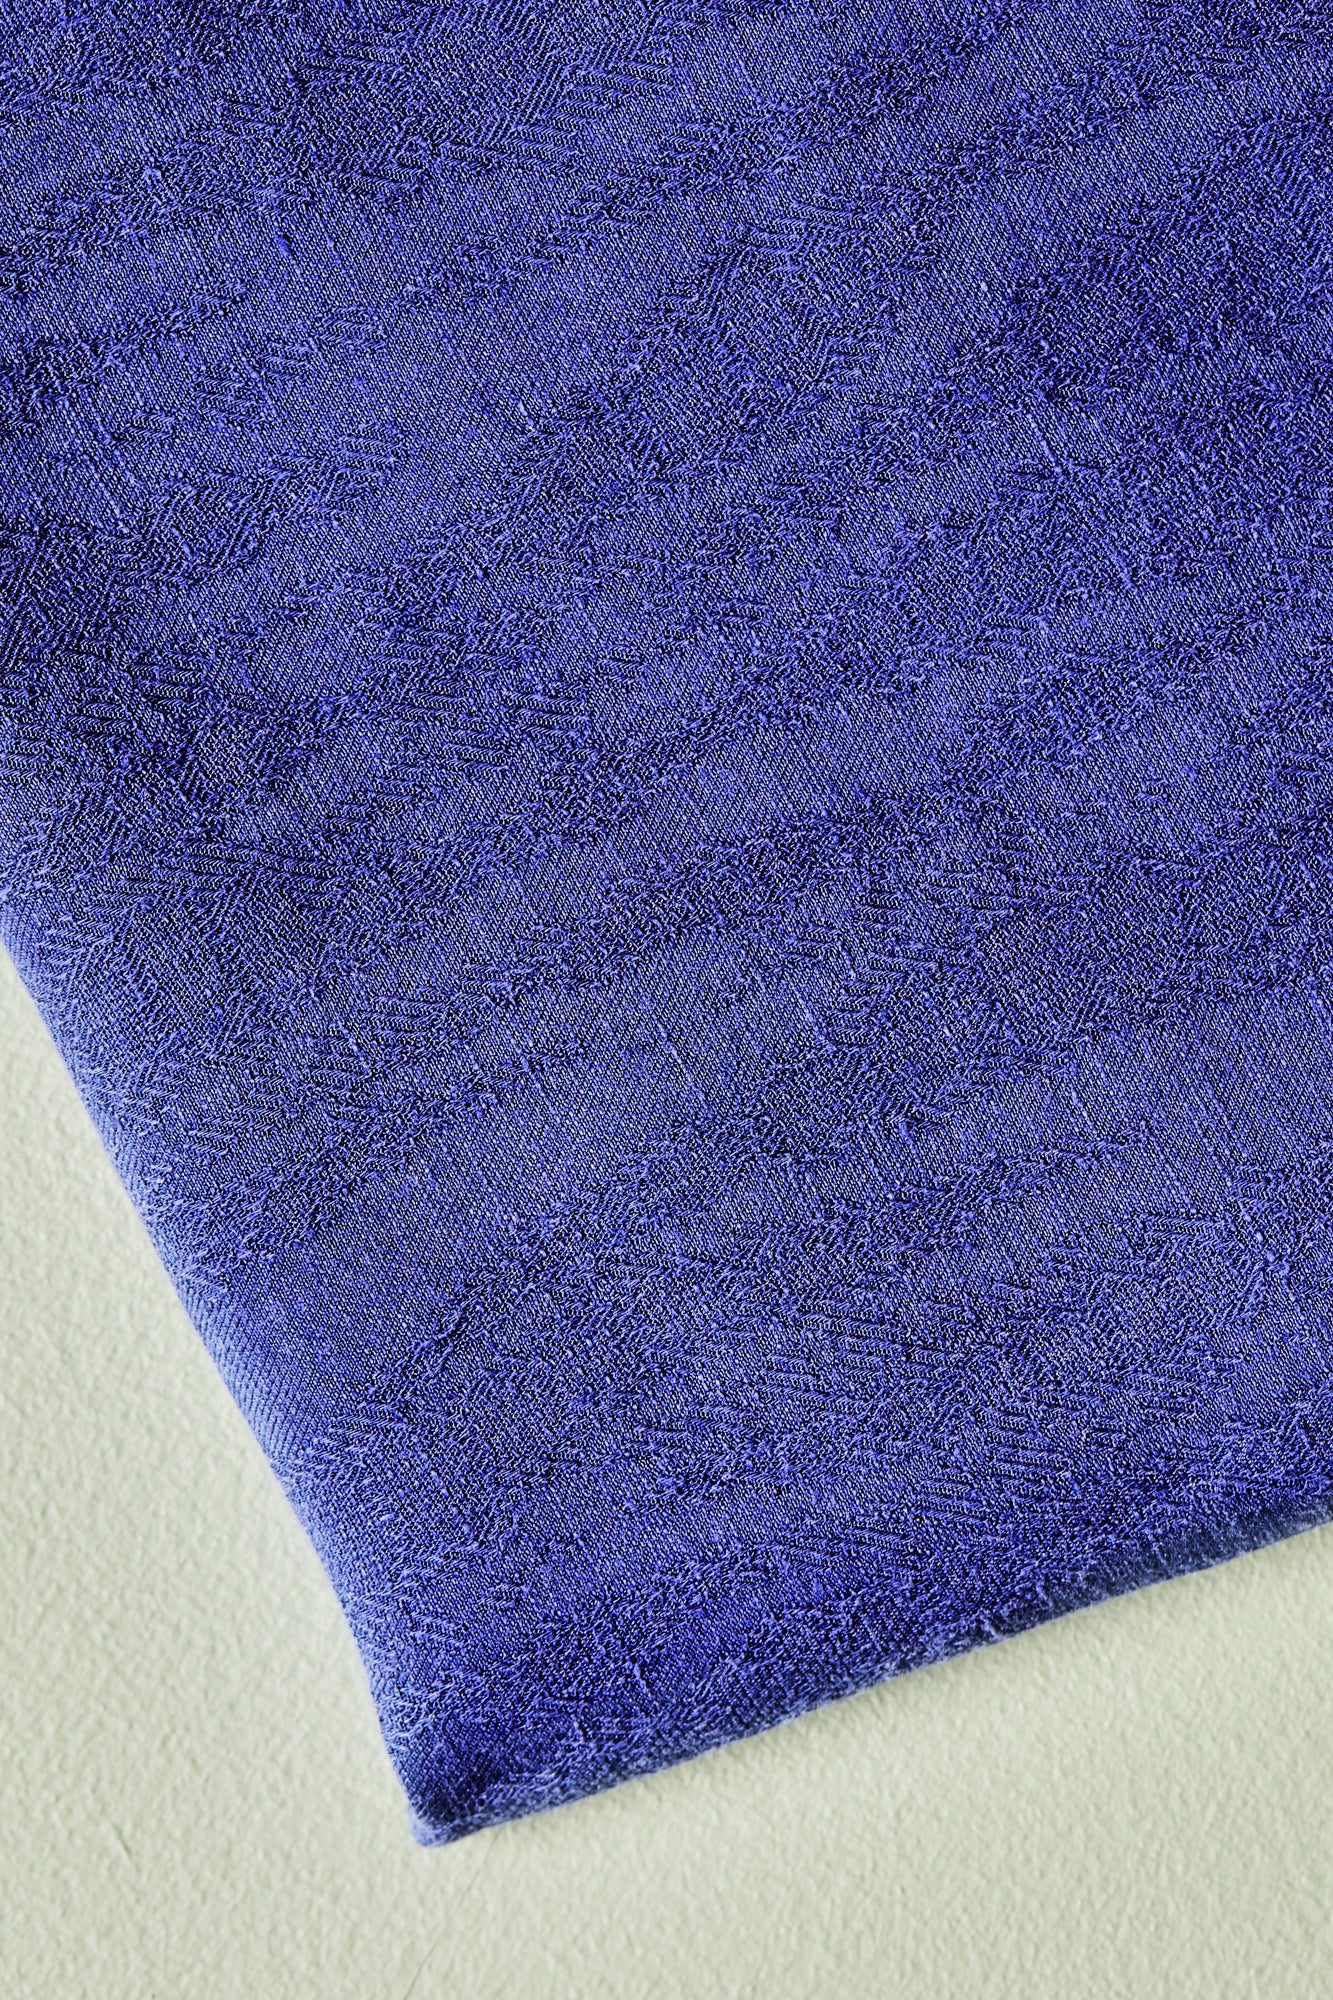 Meet MILK - Lapis Hoya Jacquard Linen with TENCEL™ Lyocell fibres